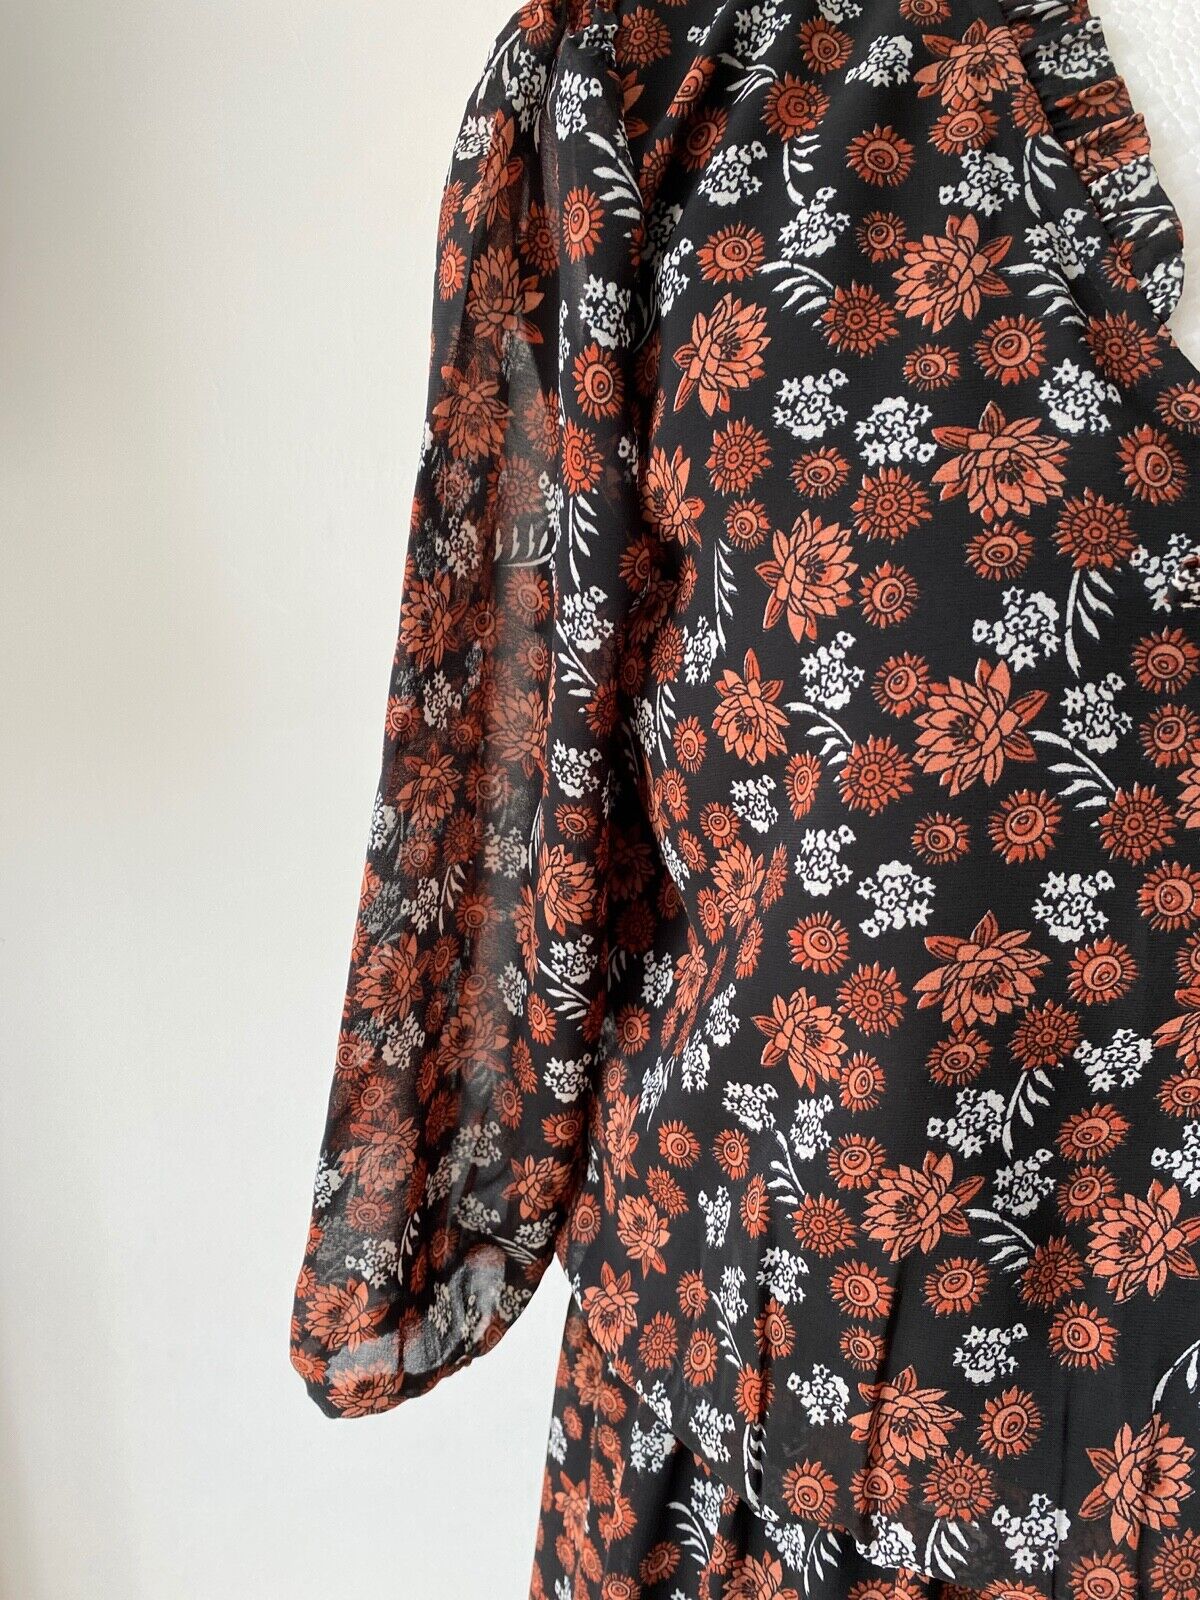 La Redoute R edition Chiffon Layered Black Brown Floral Dress Size 12